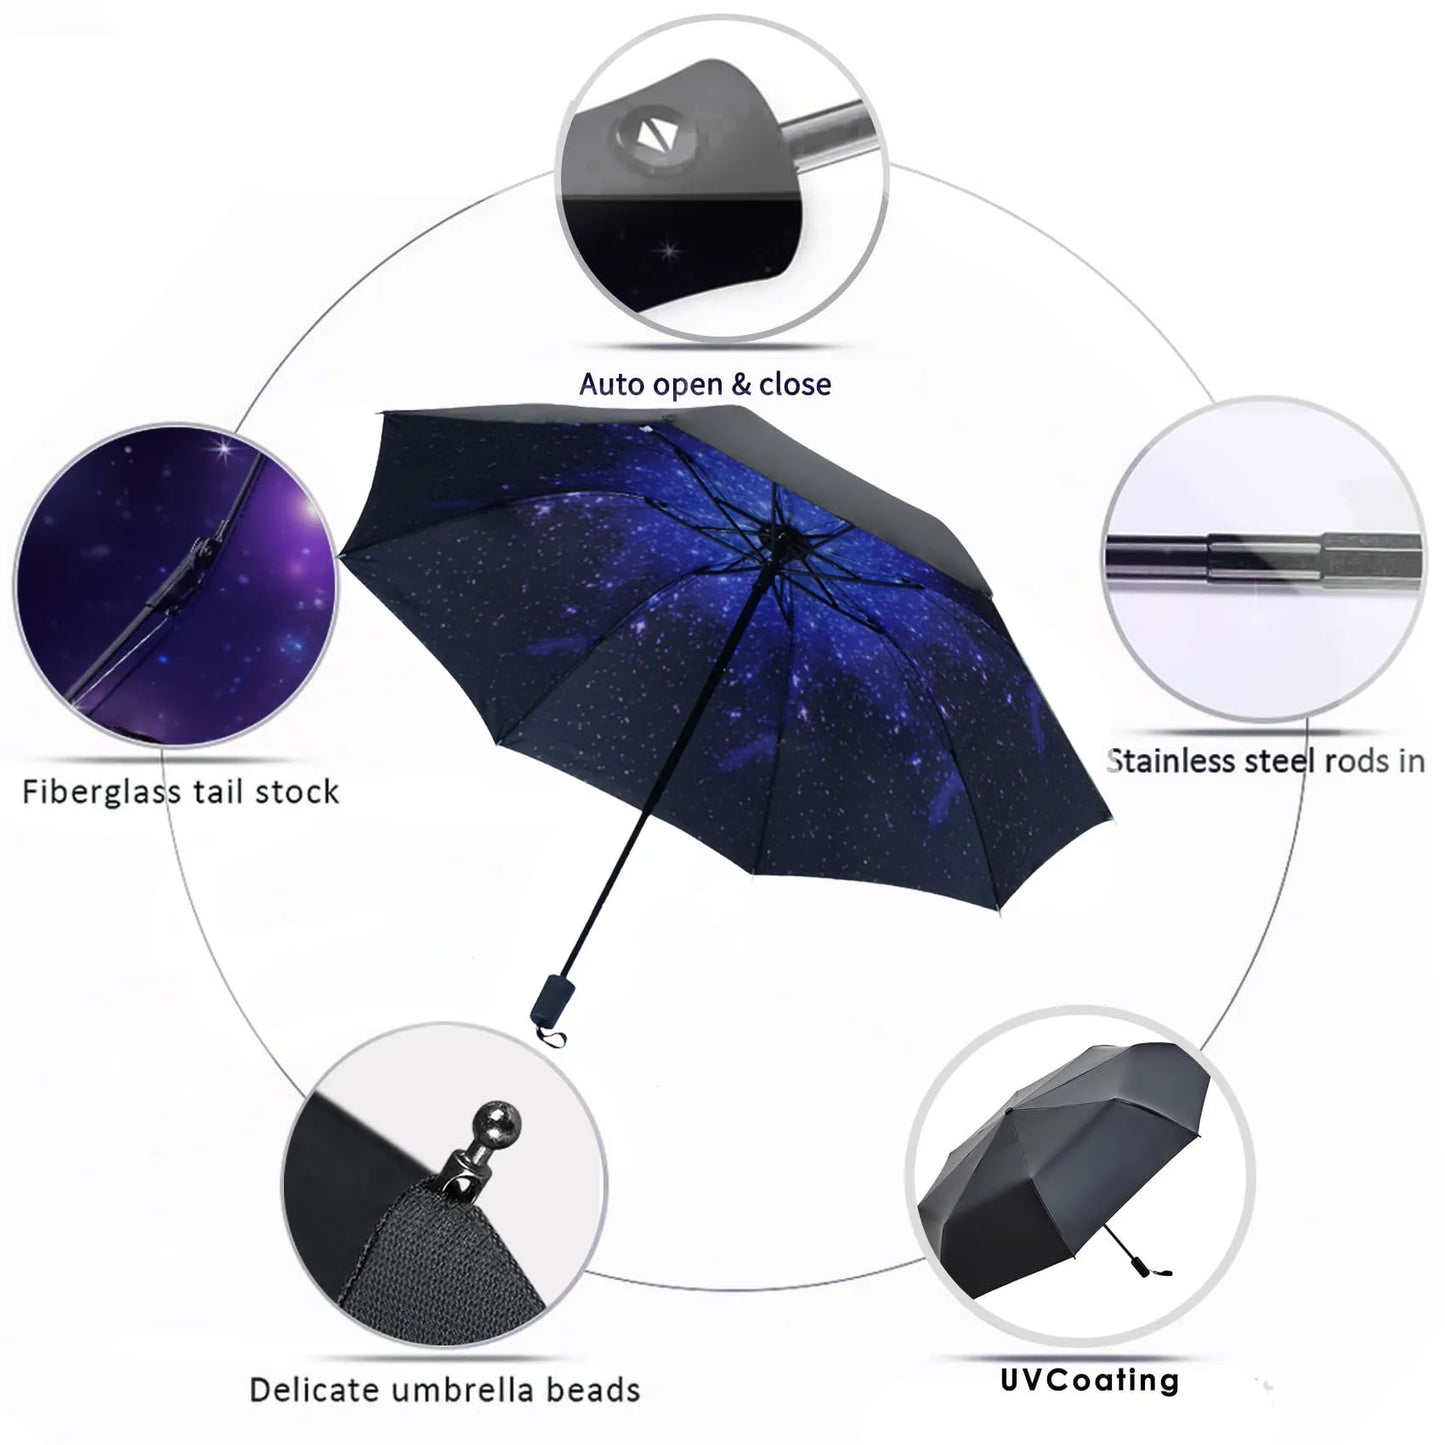 Compact Windproof Umbrella for Women Men Lightweight Automat Umbrella Sunny Rainy Umbrellas Waterproof Protable Travel Small